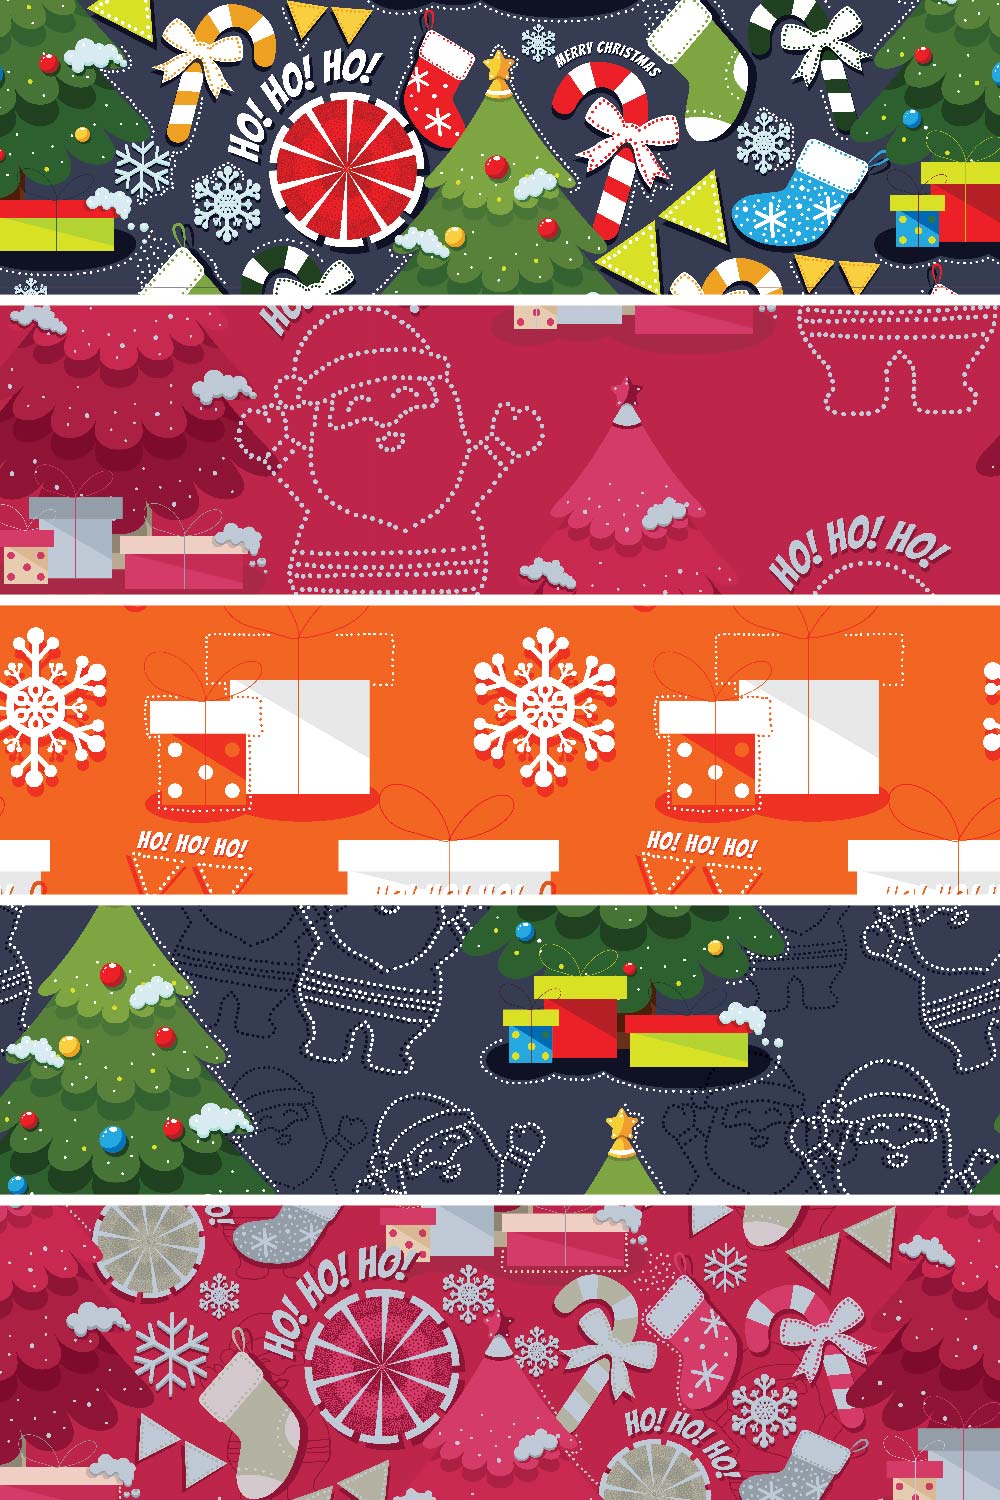 Colourful Seamless Christmas Digital Pattern Design pinterest image.